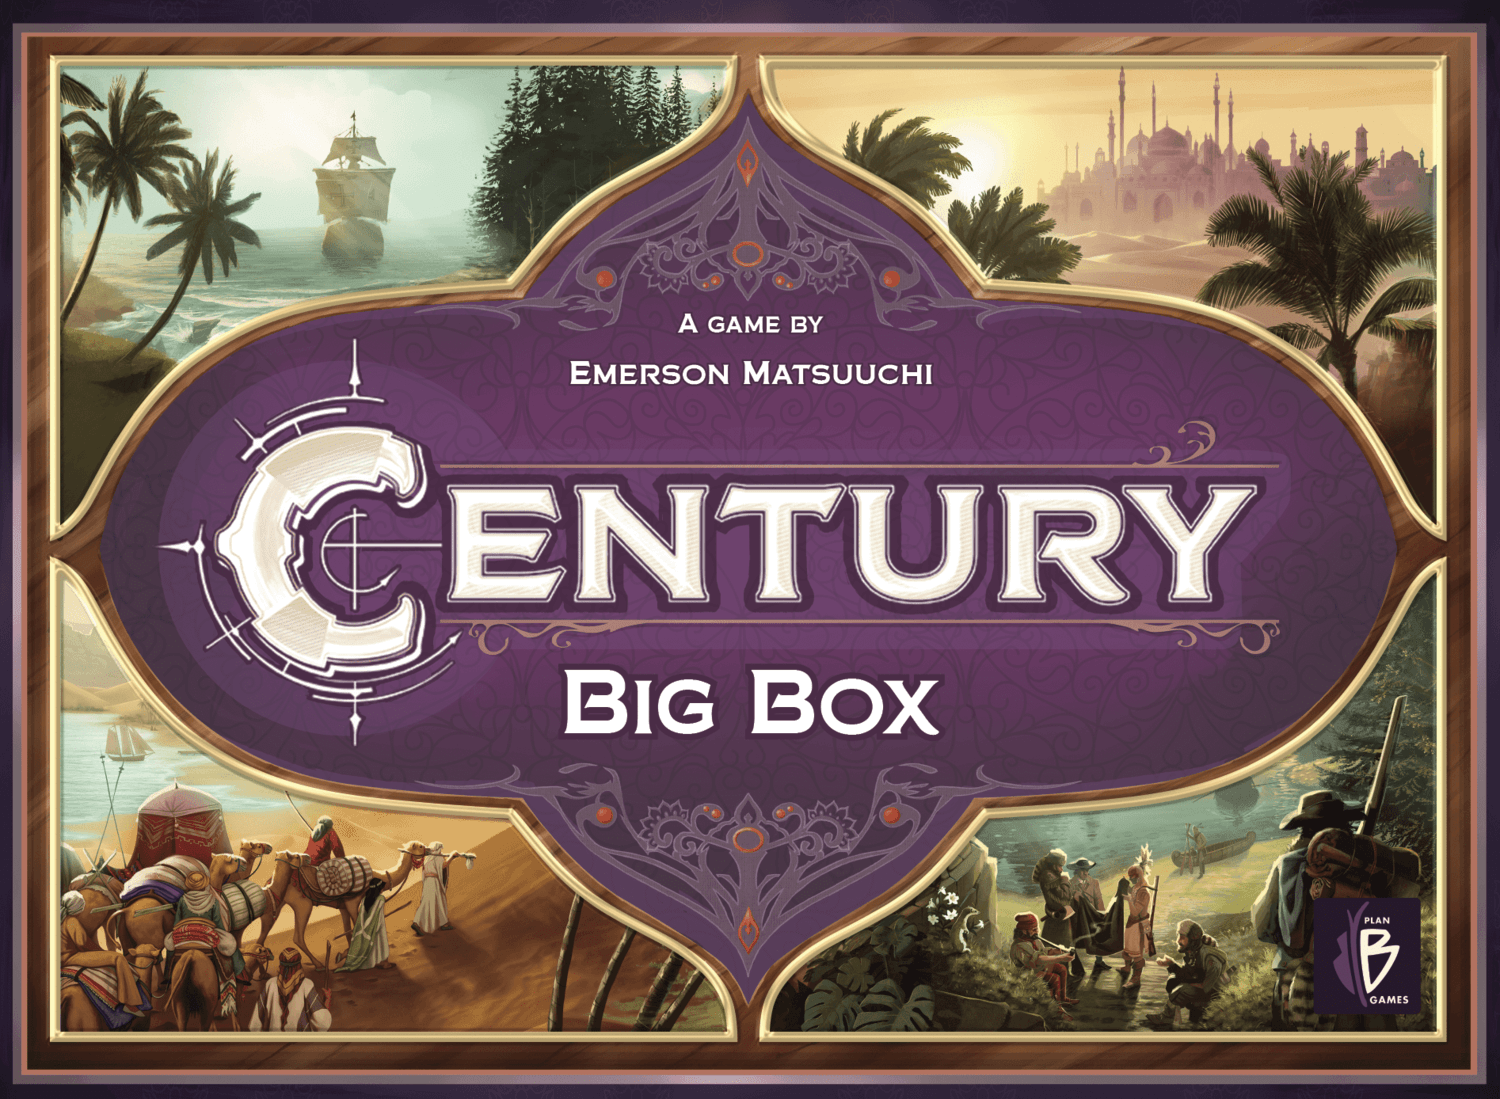 Plan B Games Century: Big Box